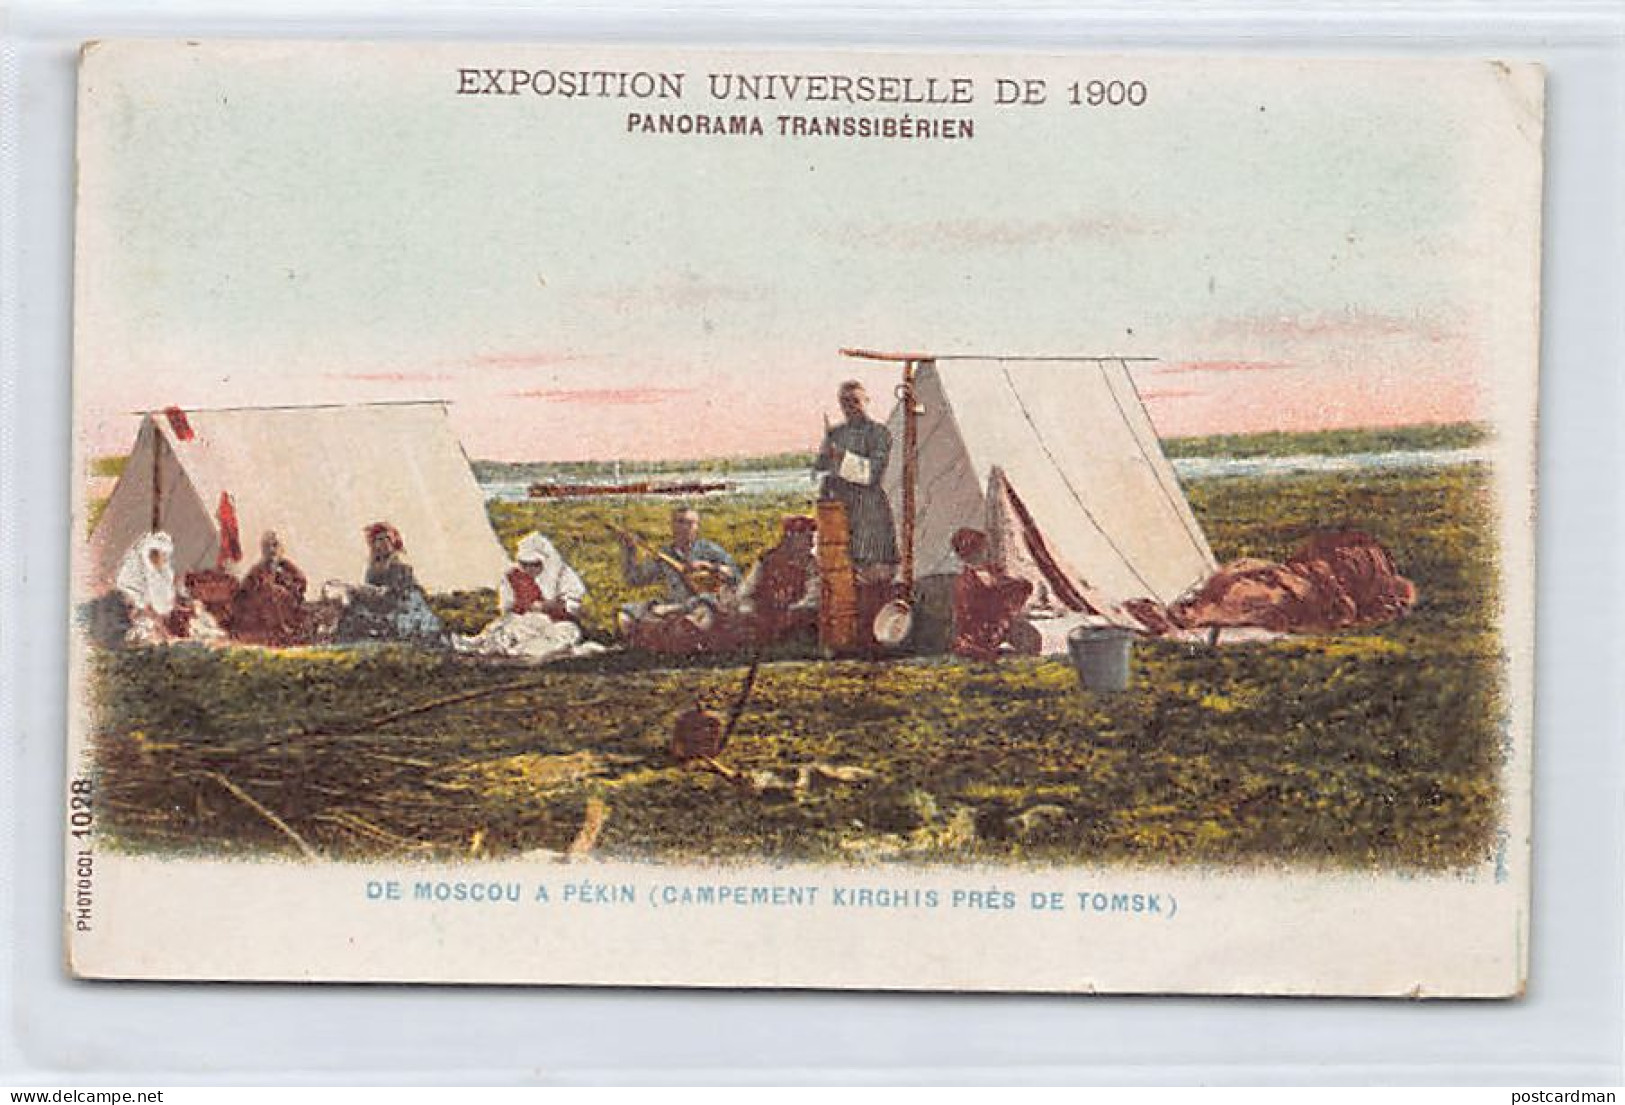 Kyrgyzstan - Kyrgyz Camp Near Tomsk, In Russia - Universal Exhibition In Paris 1900 - Kirghizistan